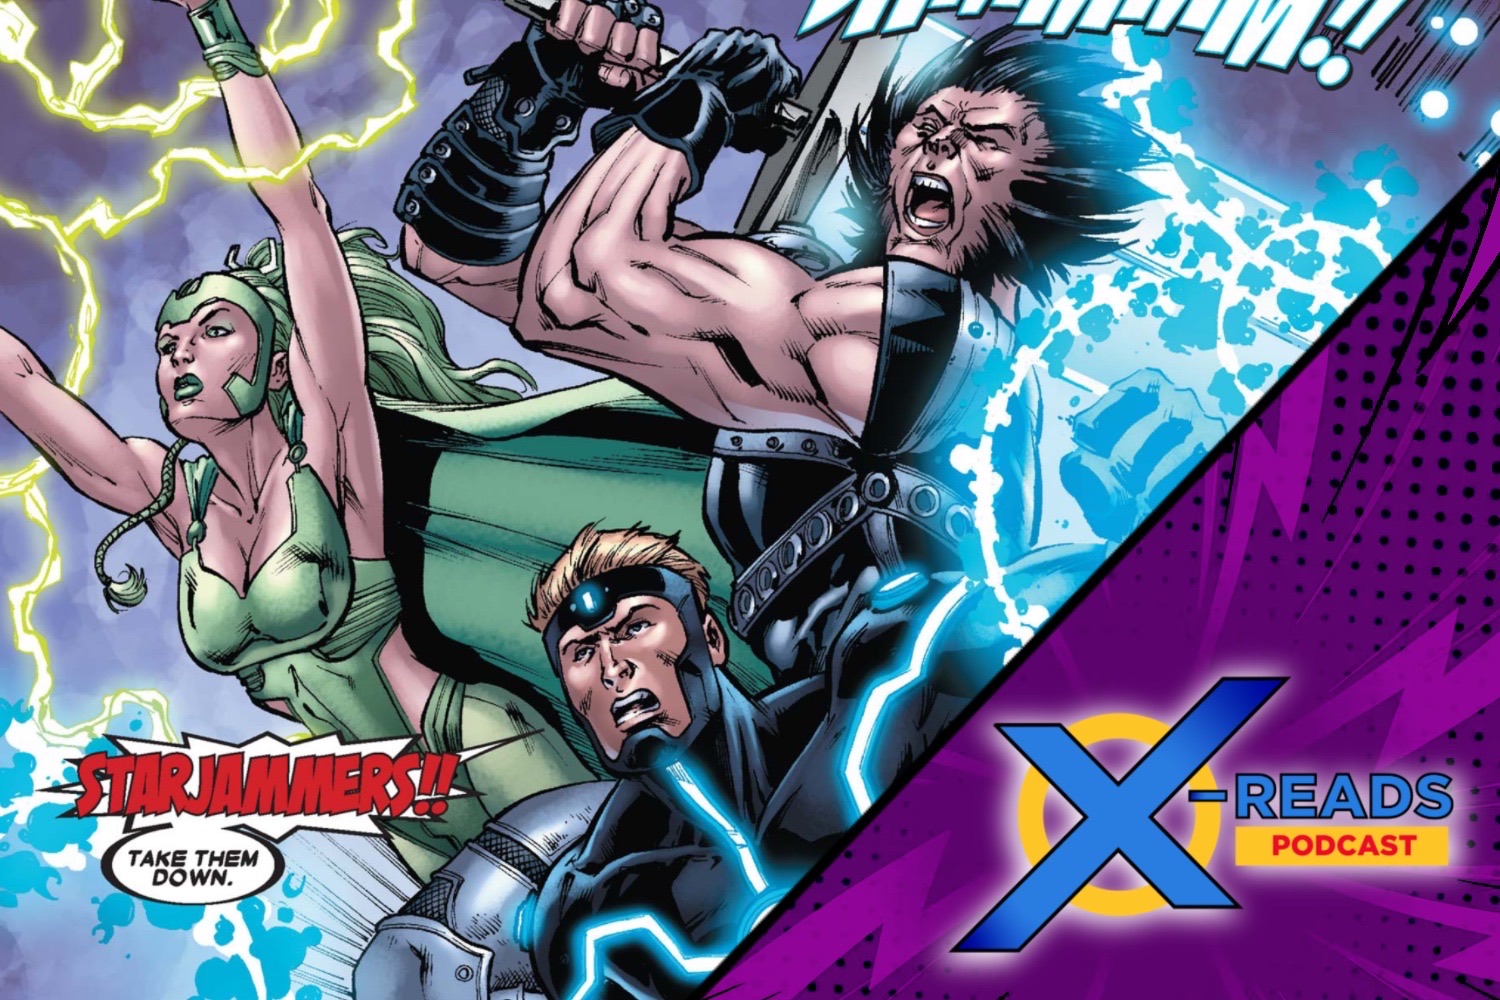 X-Reads Podcast Episode 98: 'X-Men: Emperor Vulcan' #1 with Neil Kleid